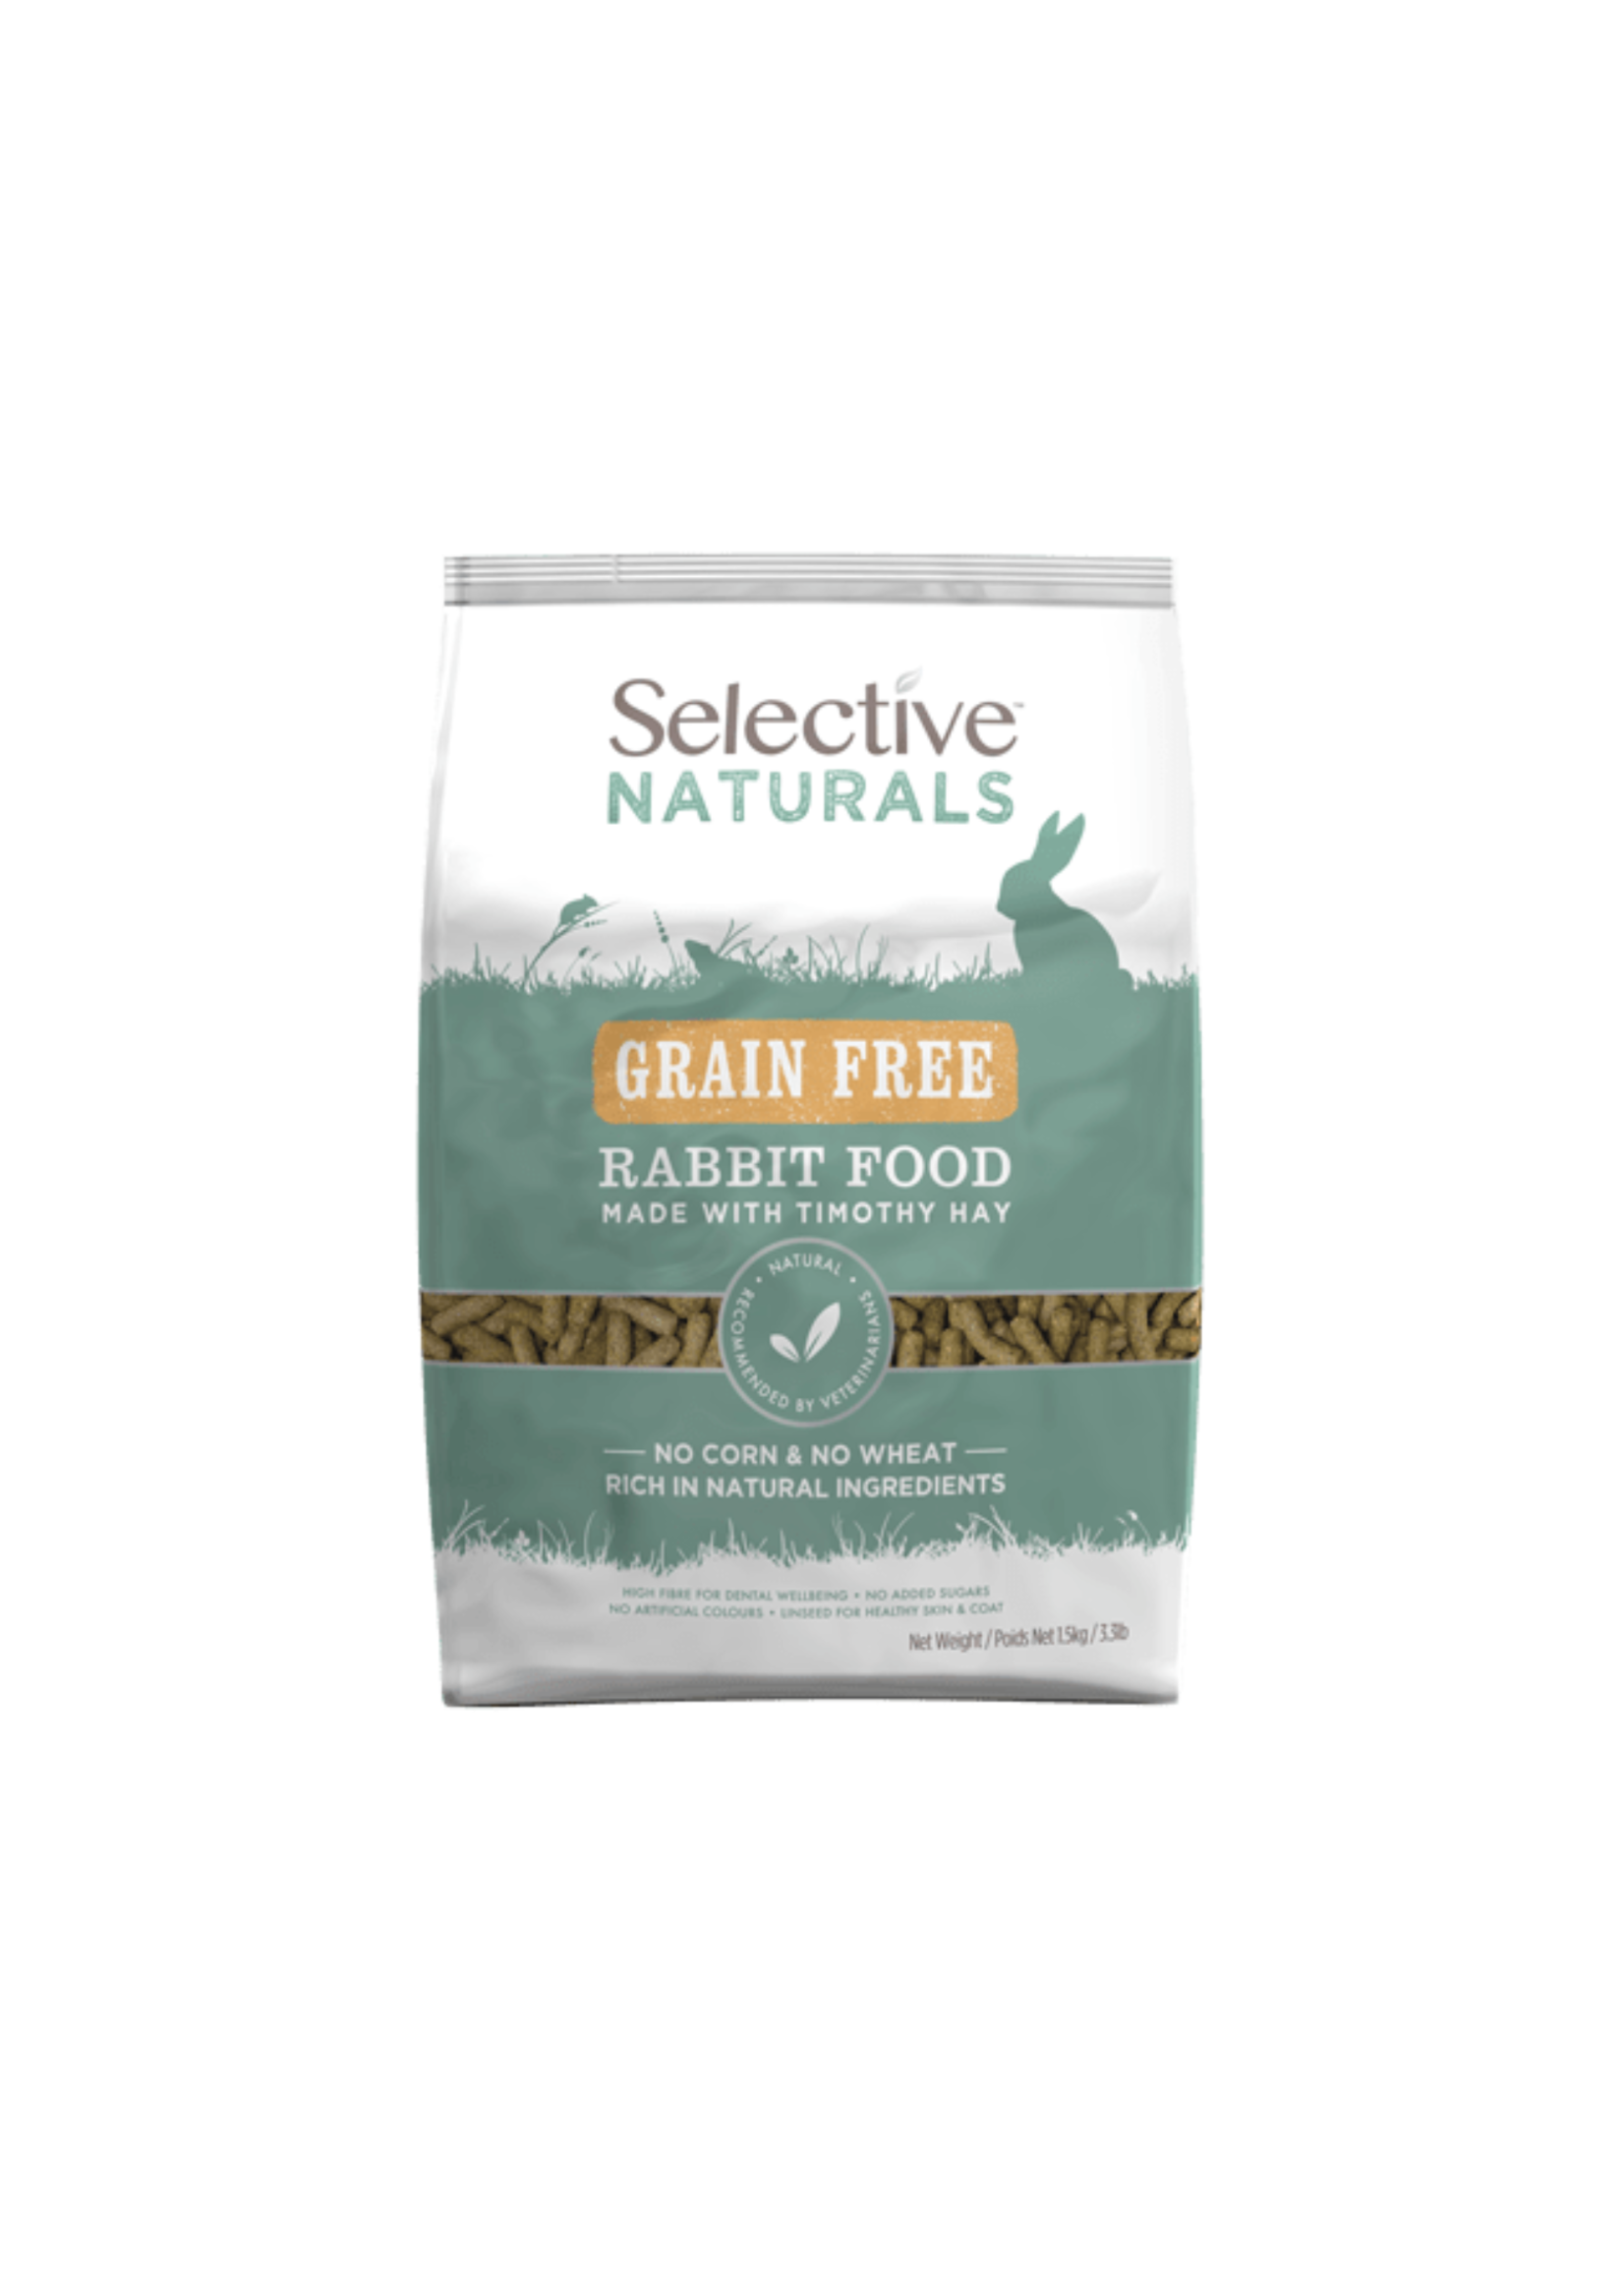 Science Naturals | Grain Free Rabbit Food